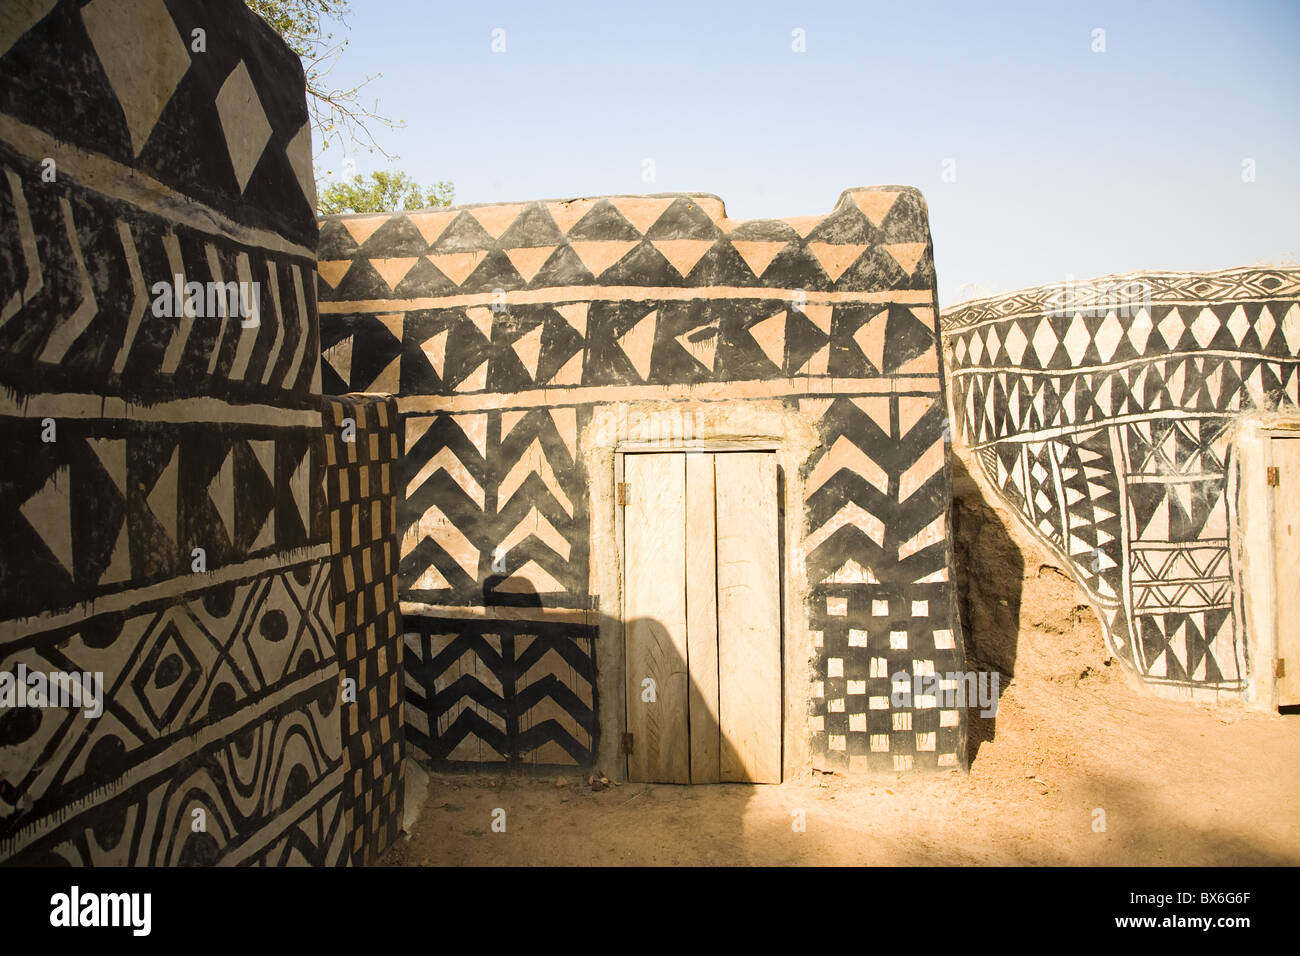 Geometric design on mud brick dwellings in Tiebele, Burkina Faso, West Africa, Africa Stock Photo